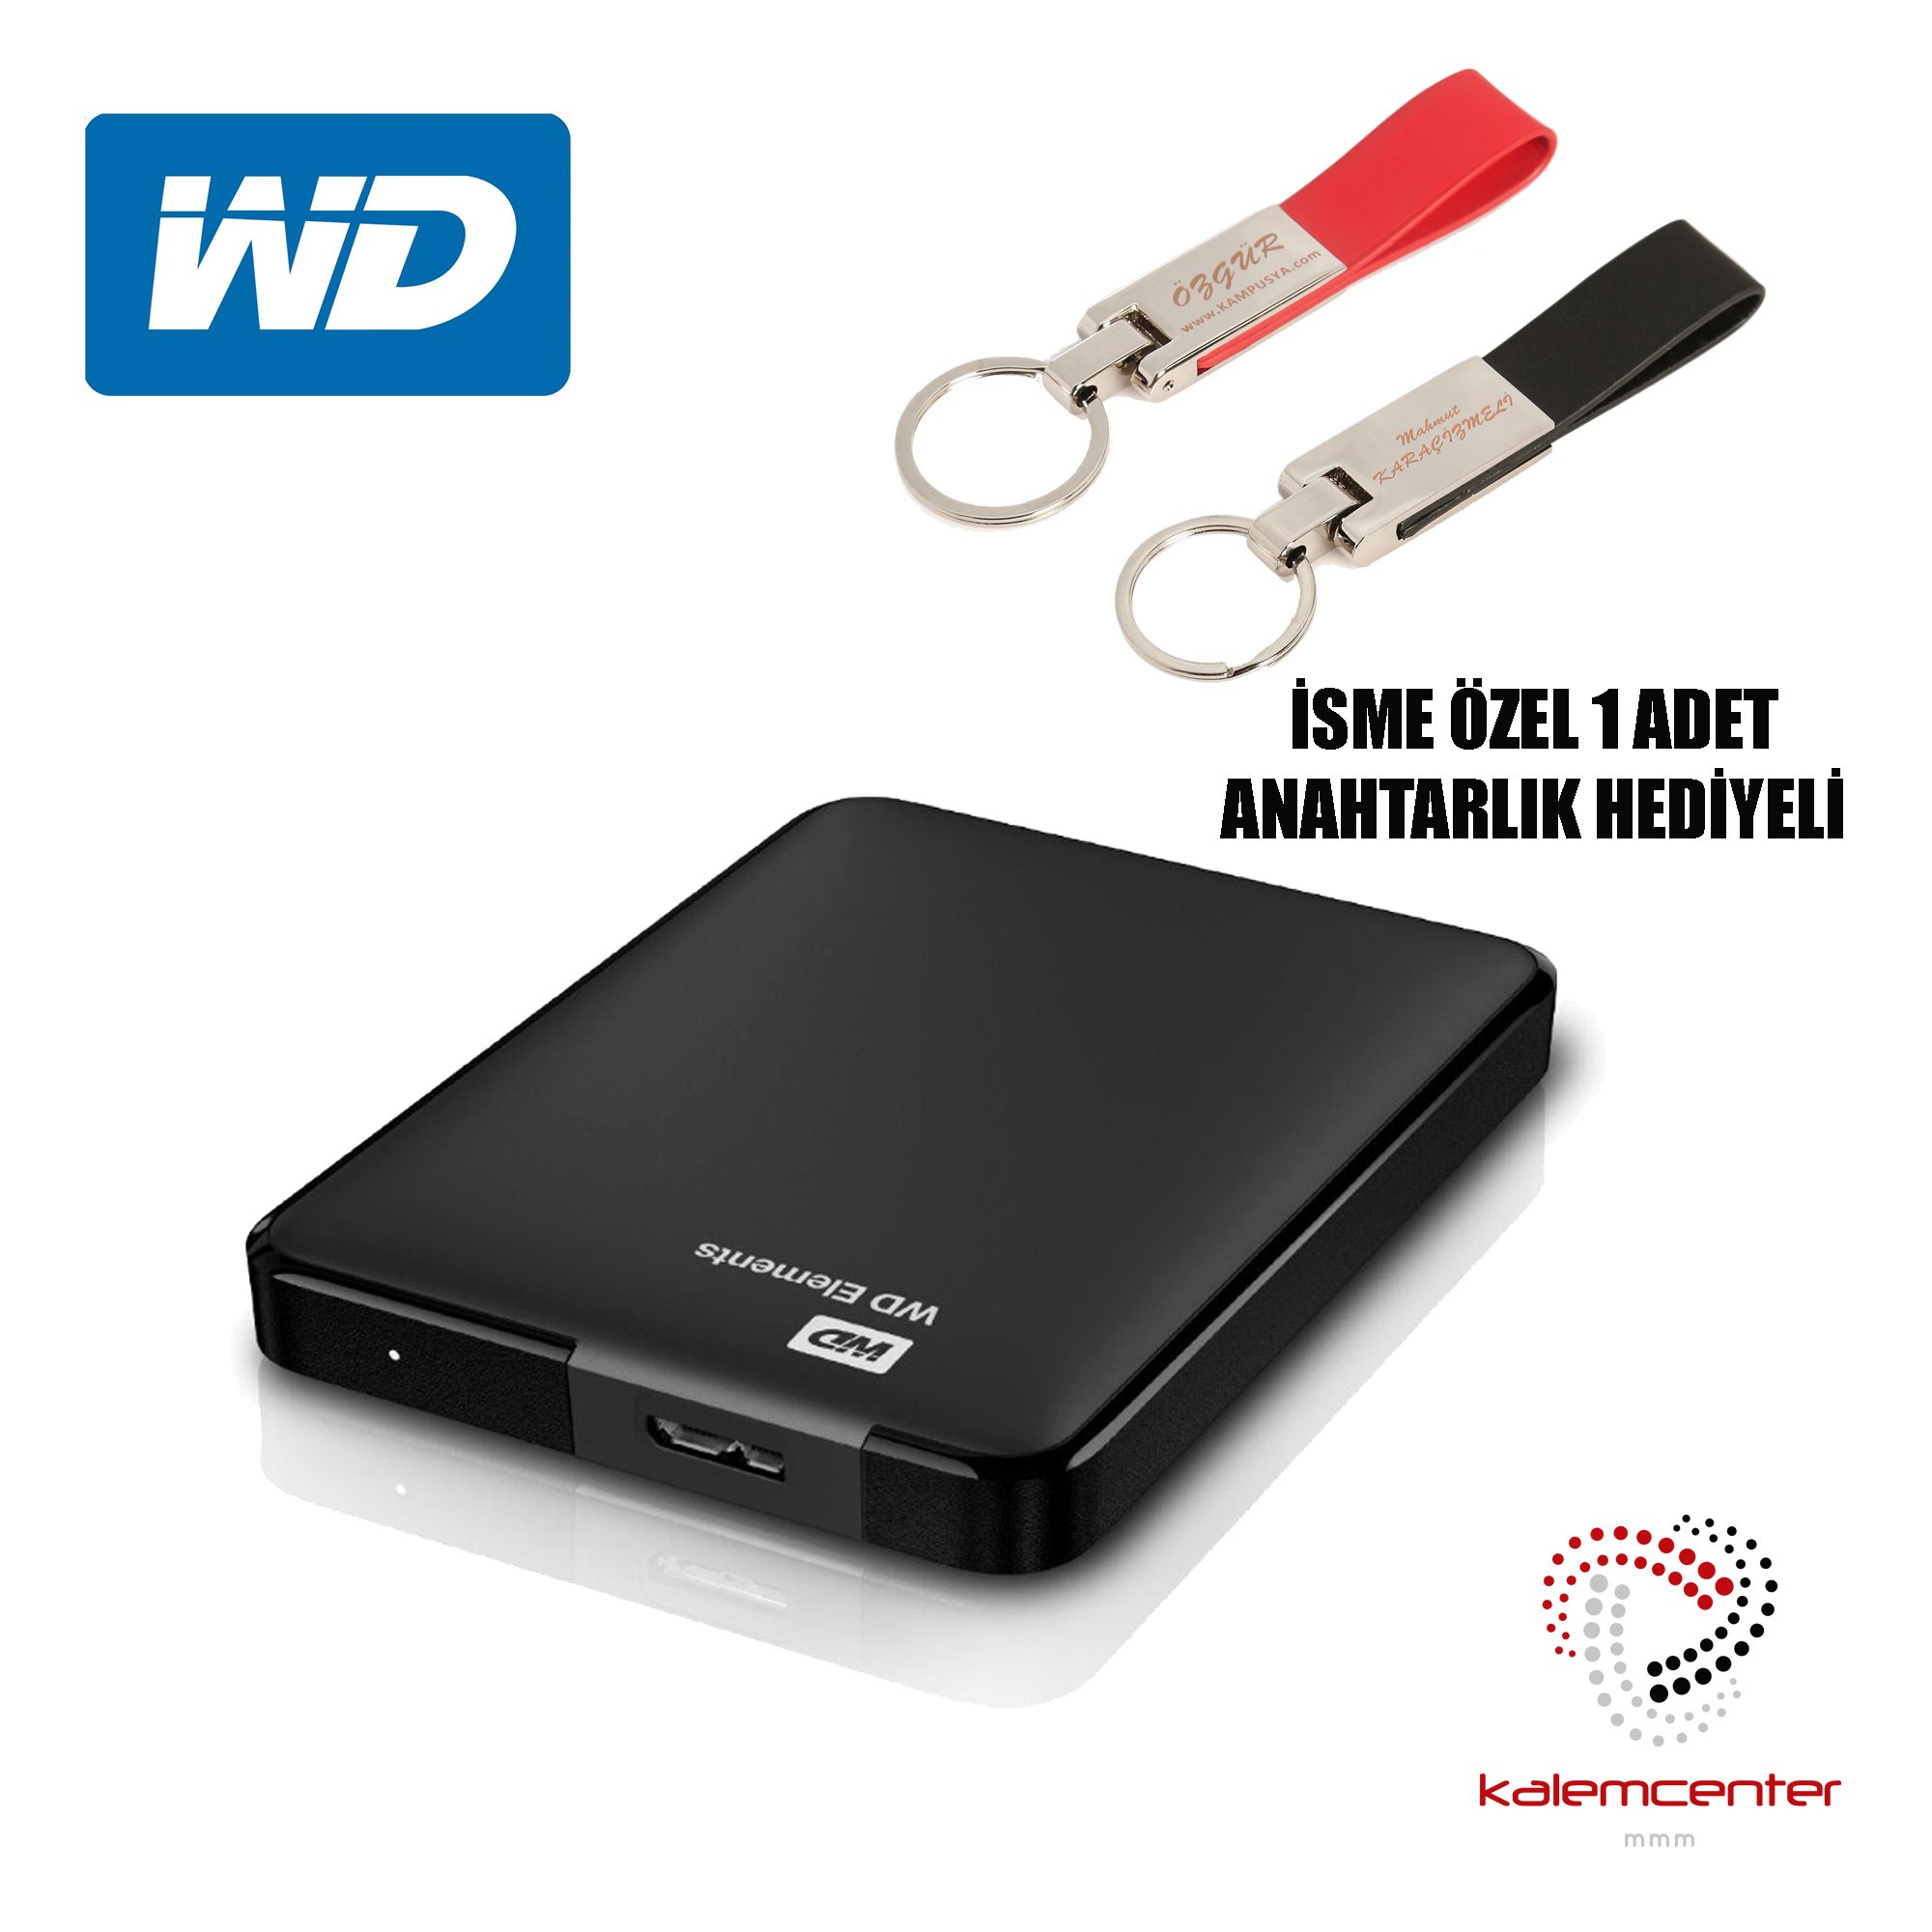 WD Elements 750GB 2.5" USB 3.0 Taşınabilir Disk